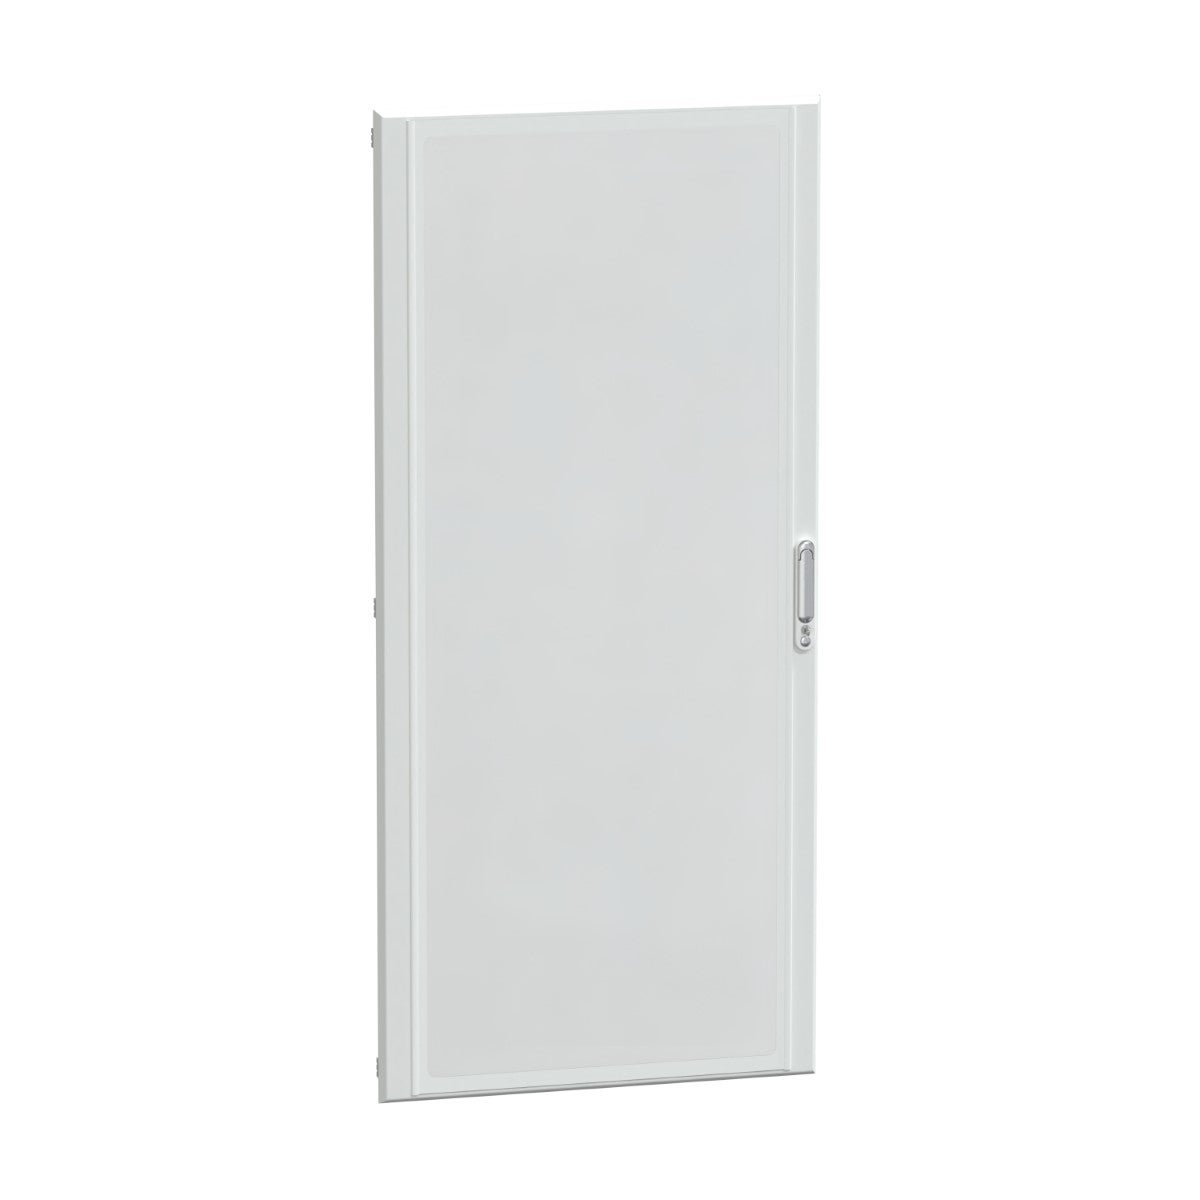 Door, PrismaSeT G, transparent type for enclosure, 36M, W850, IP30, white, RAL 9003